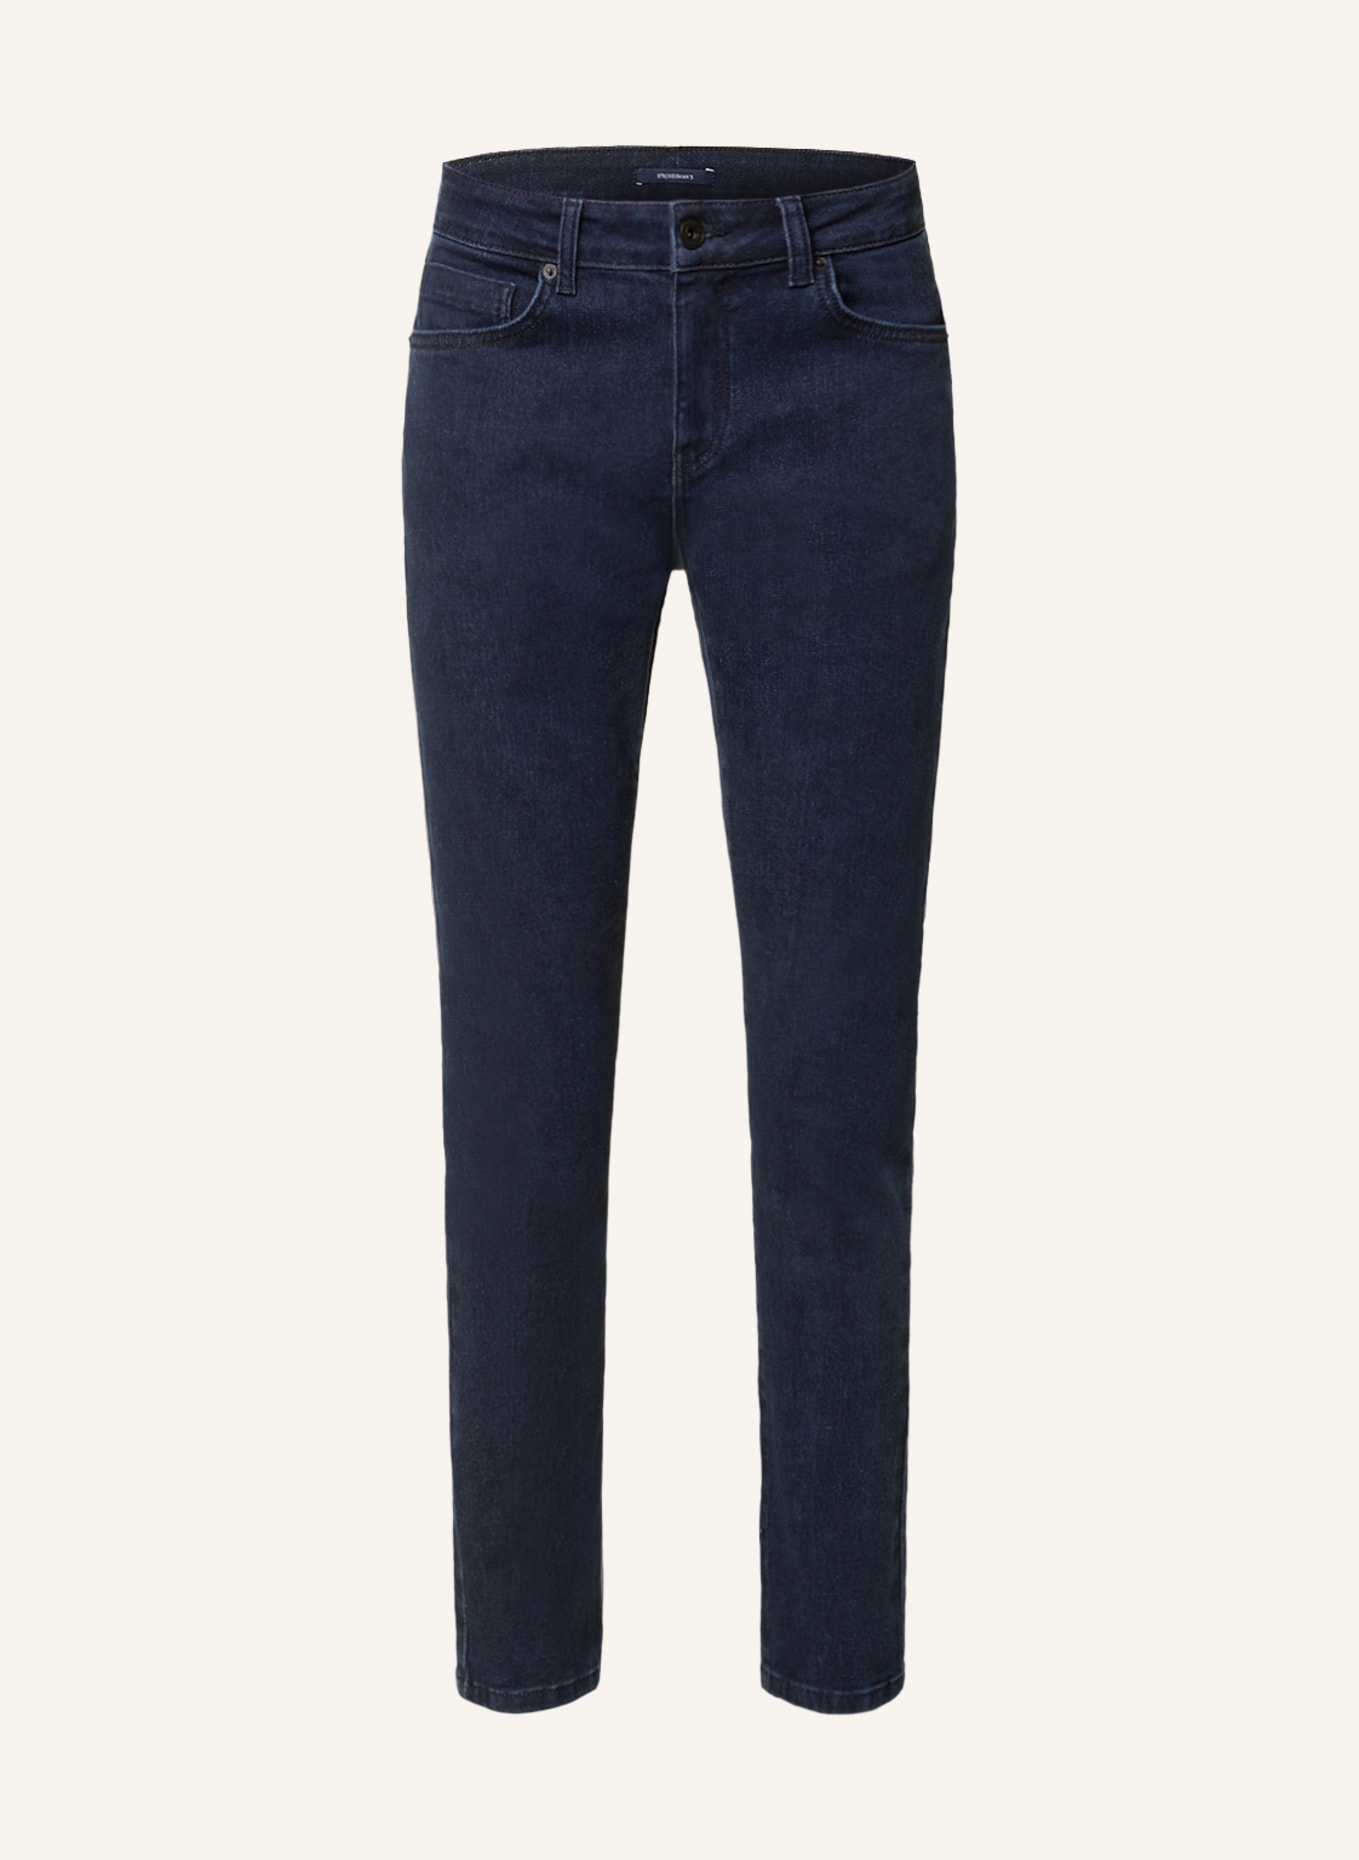 STROKESMAN'S Jeans Slim Fit, Farbe: 2 rinsed blue (Bild 1)